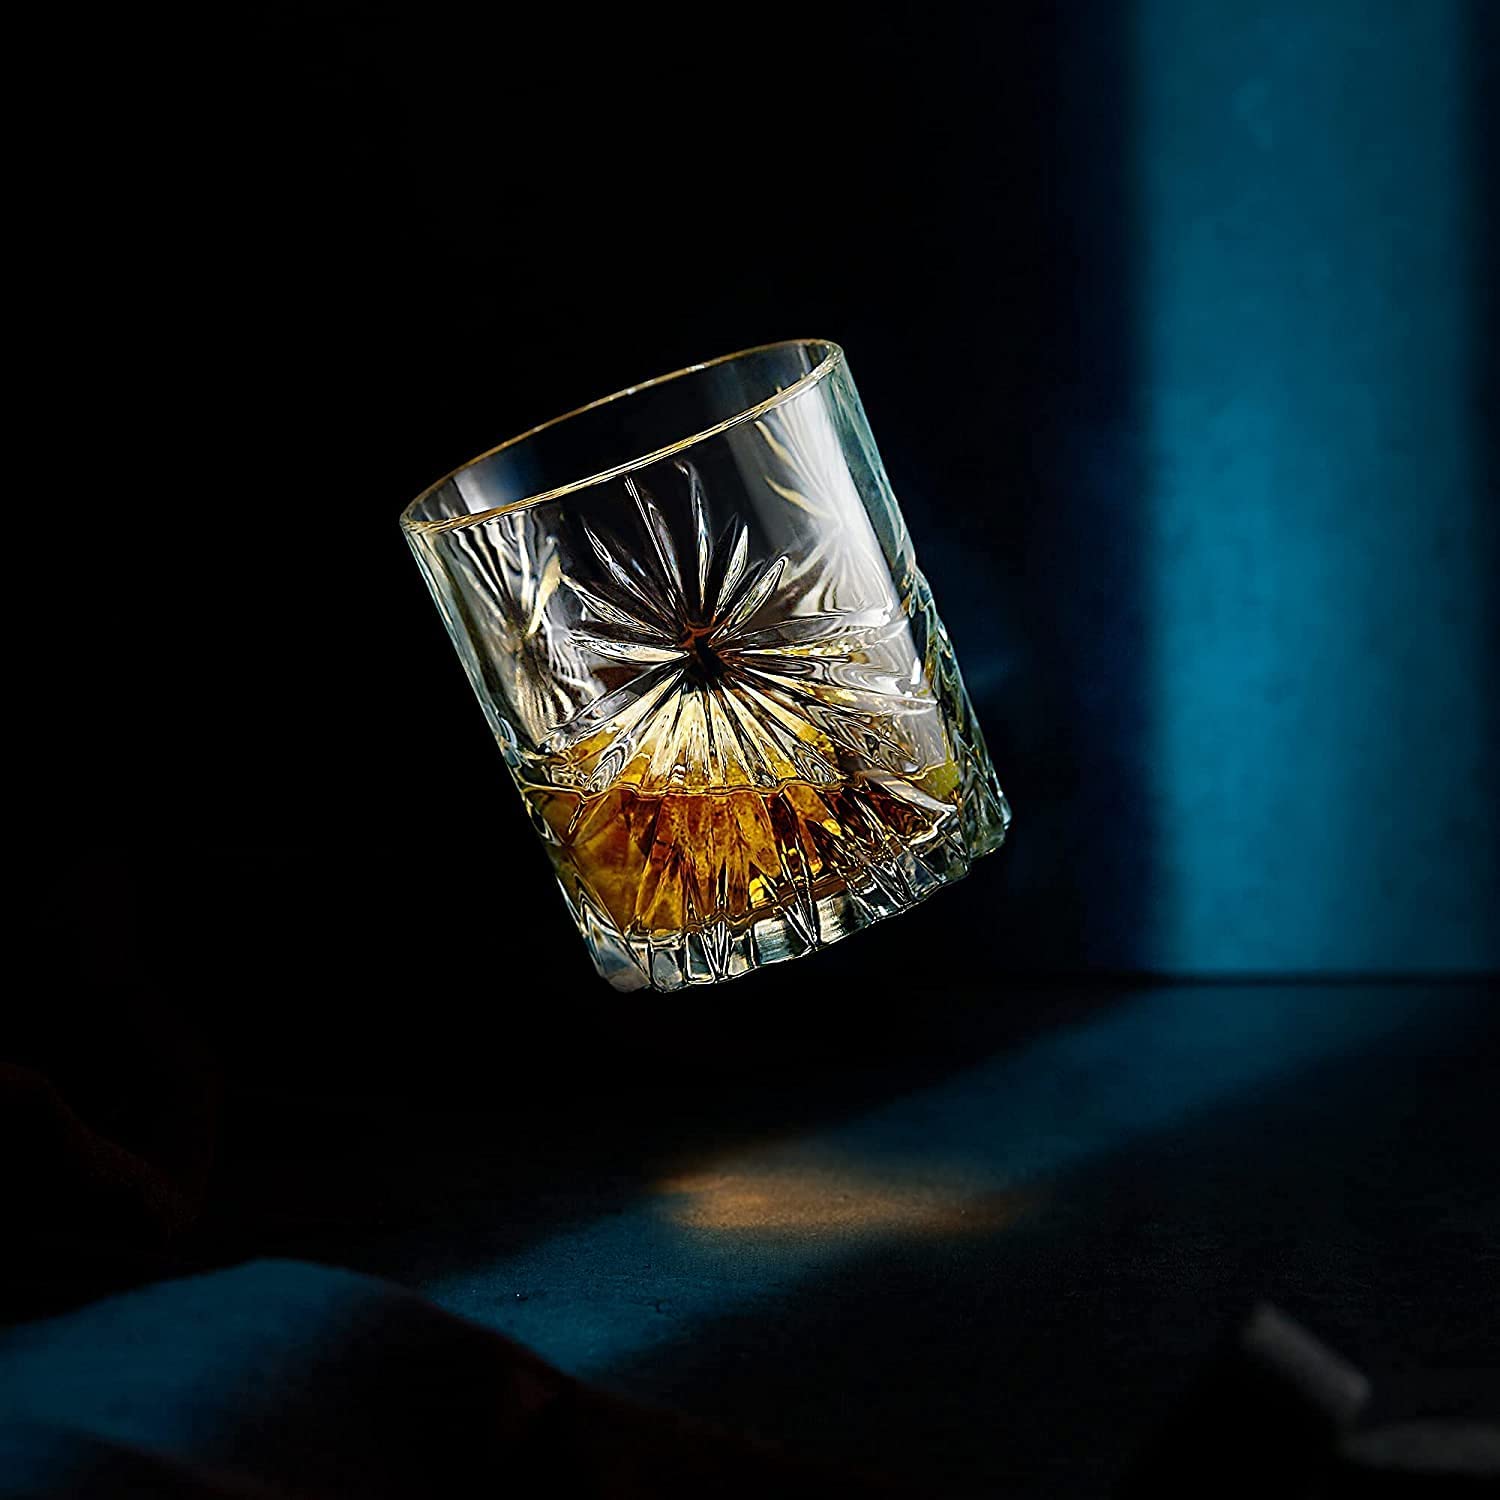 Whiskey Stones &amp; Crystal Glass Gift Set - Soleil Tumbler (11.7oz)